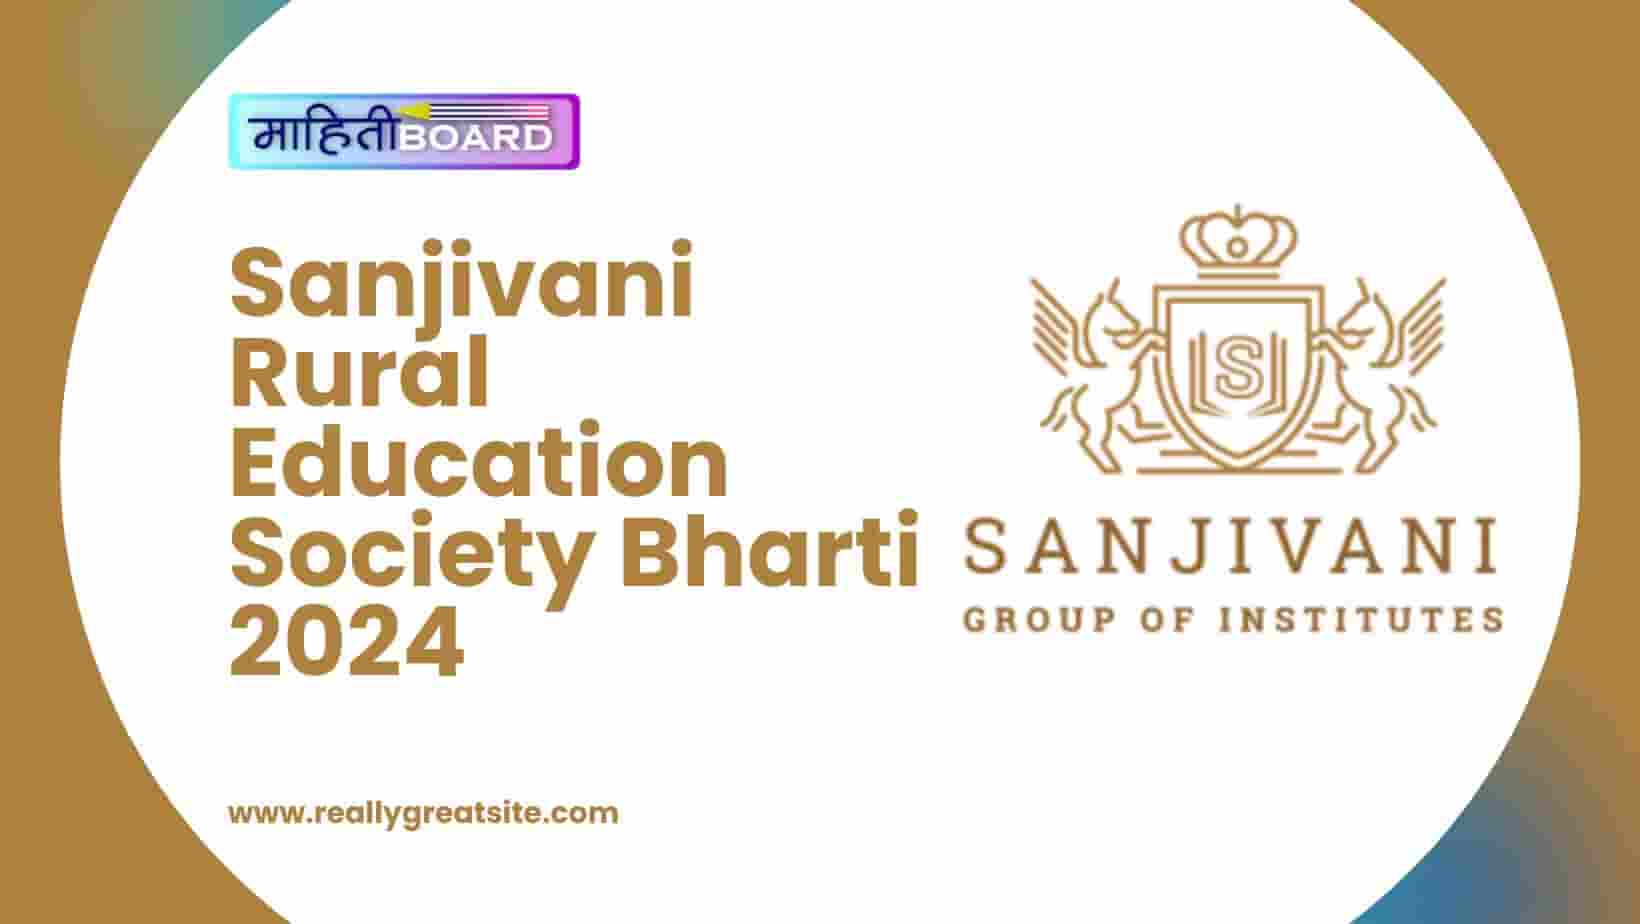 Sanjivani Rural Education Society Bharti 2024